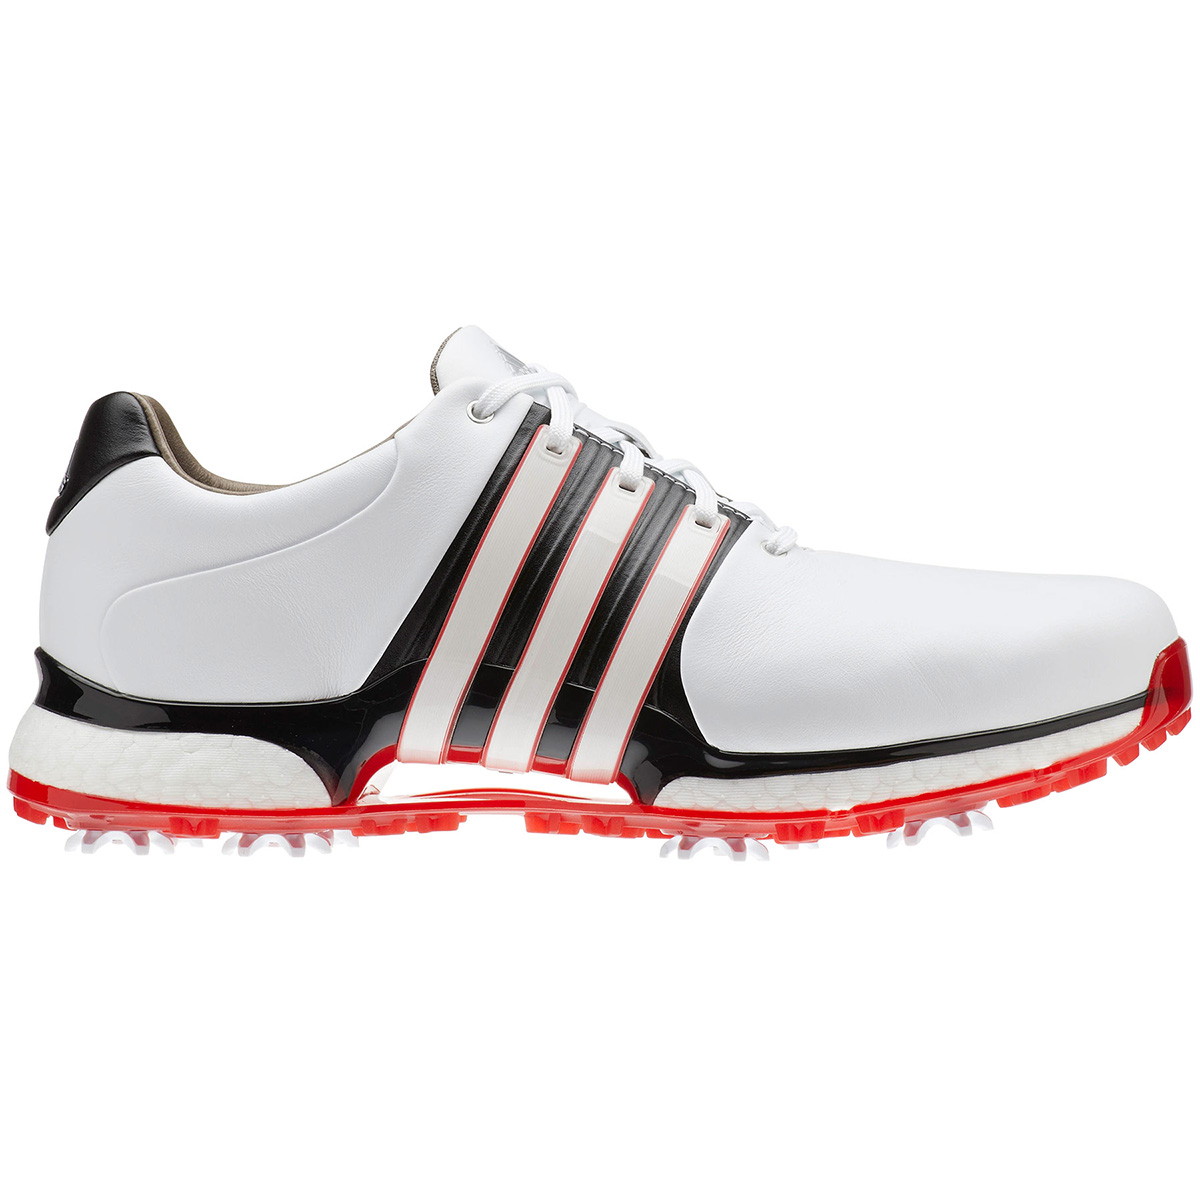 adidas golf shoes 360 xt